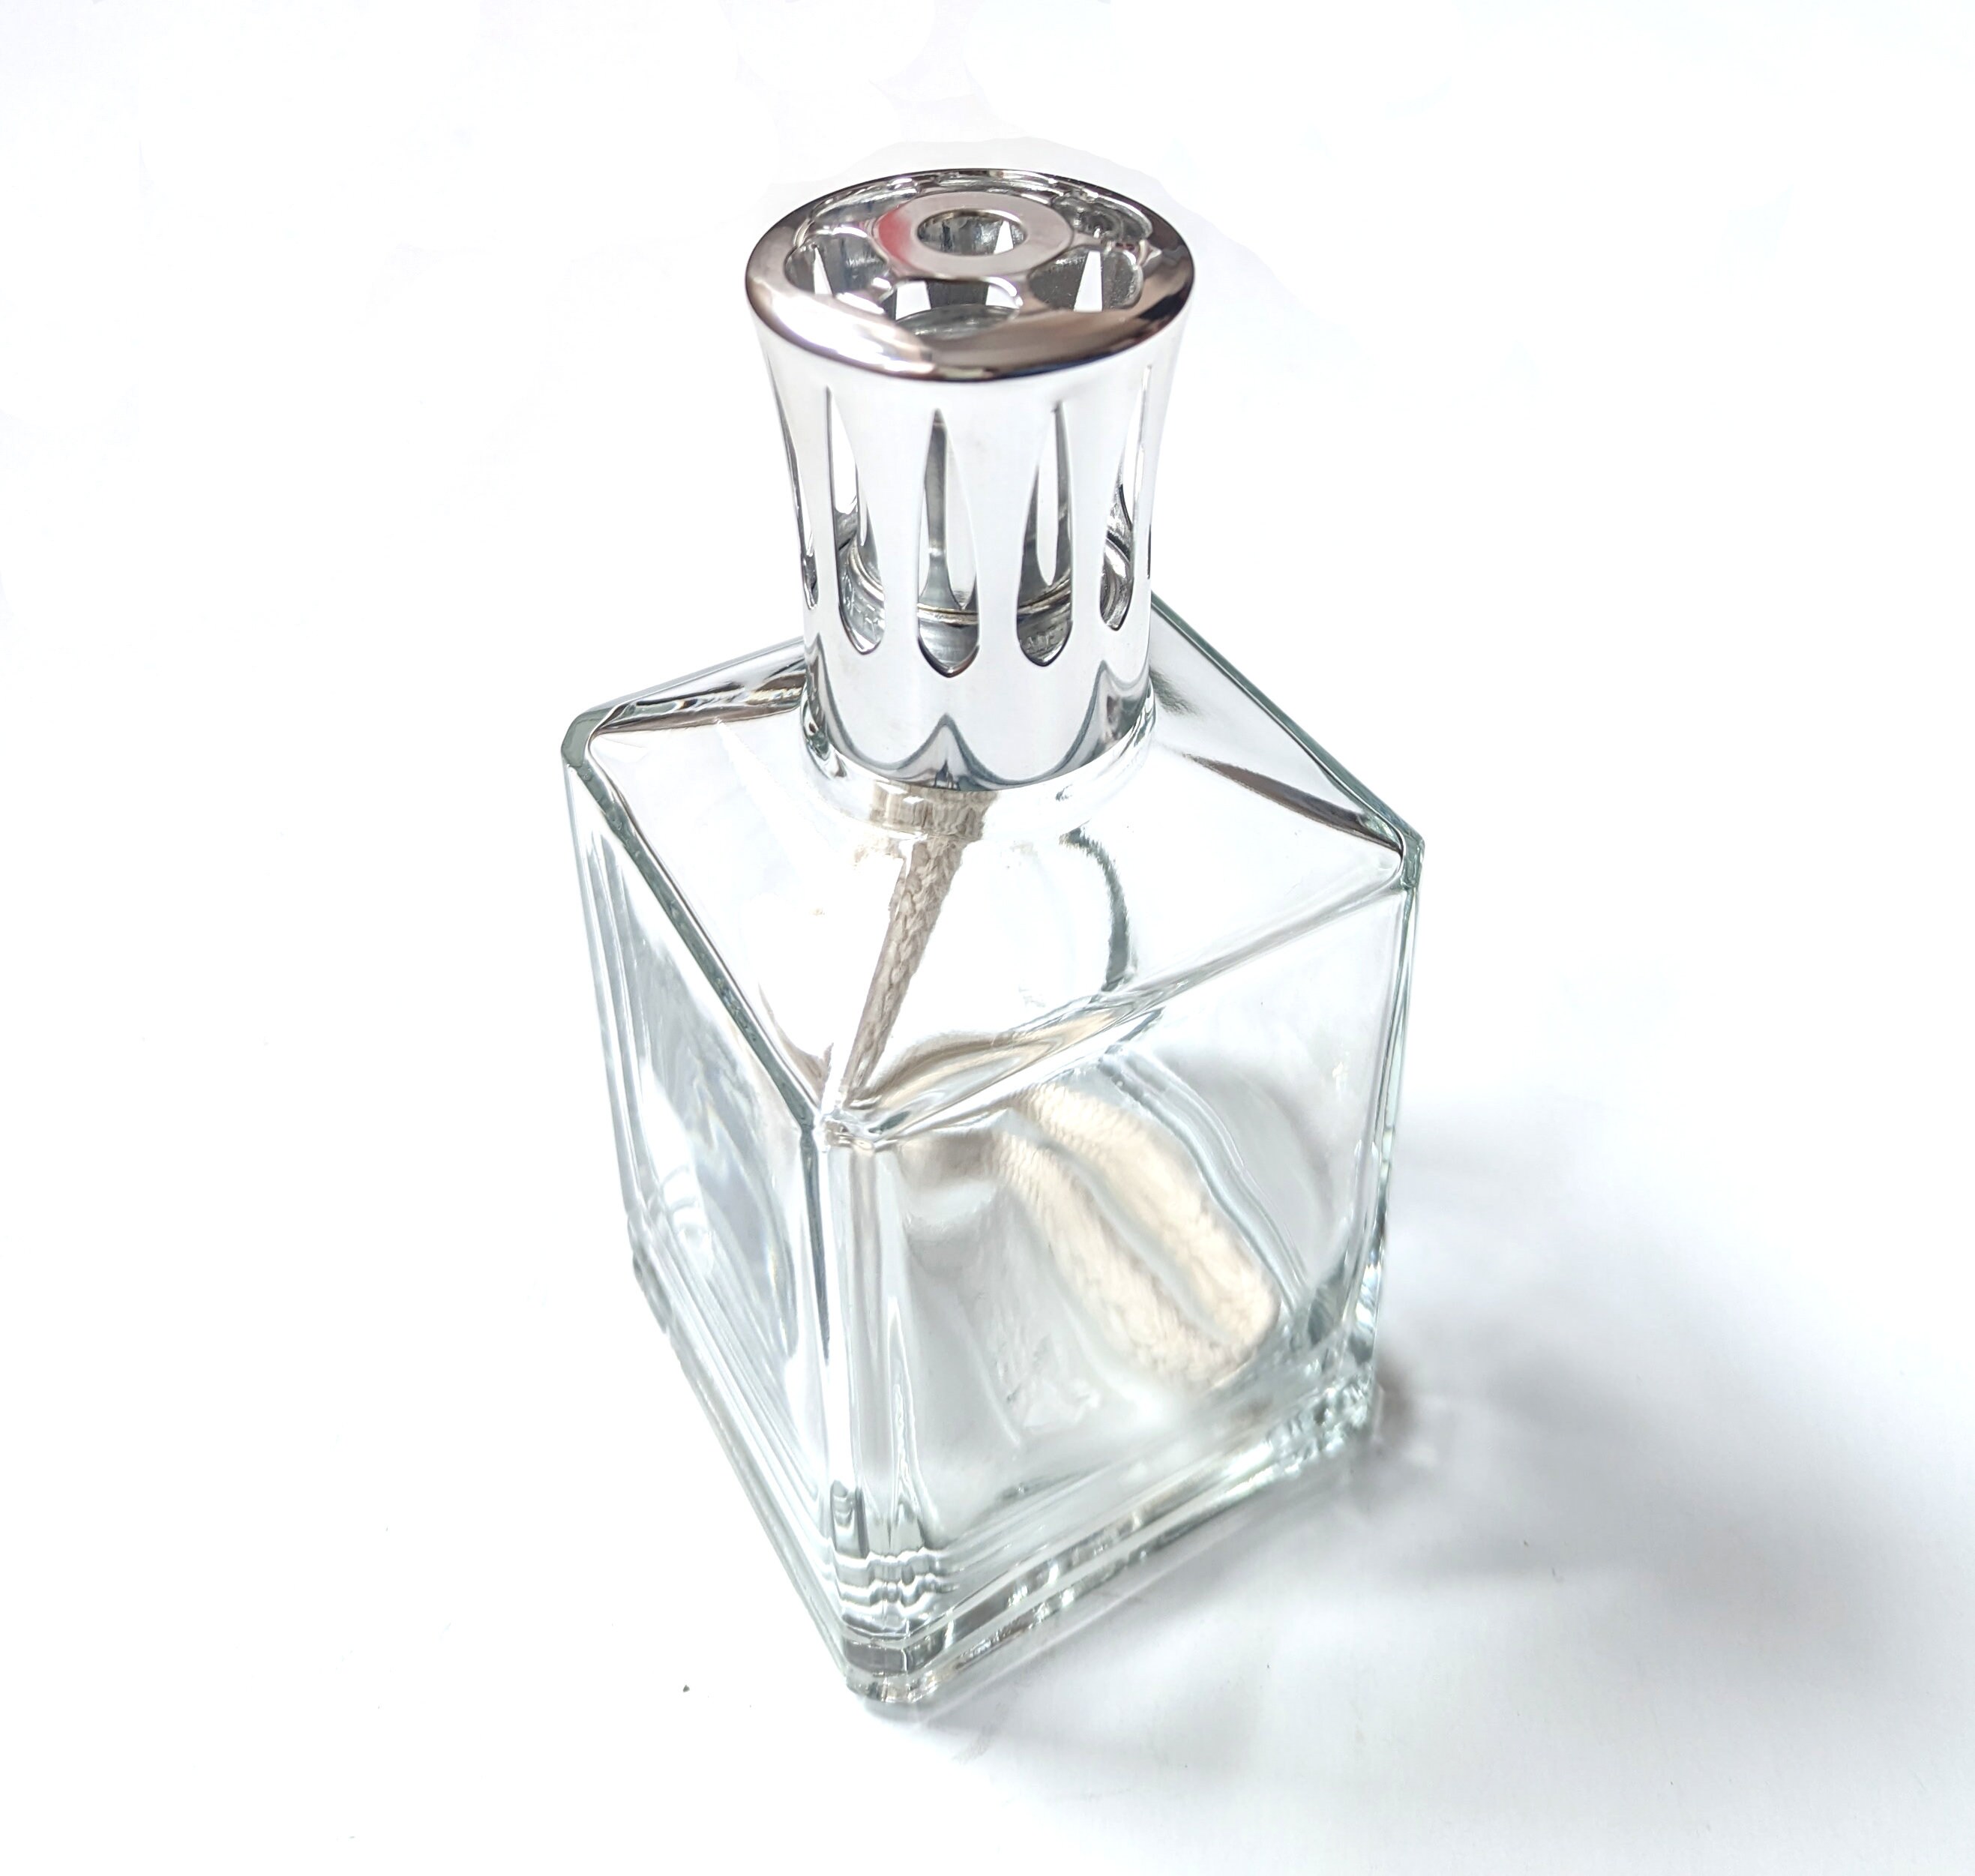 Lampe Berger Oil Diffusers and Parfum Oils - Fragrances - Sydney, Australia, Facebook Marketplace